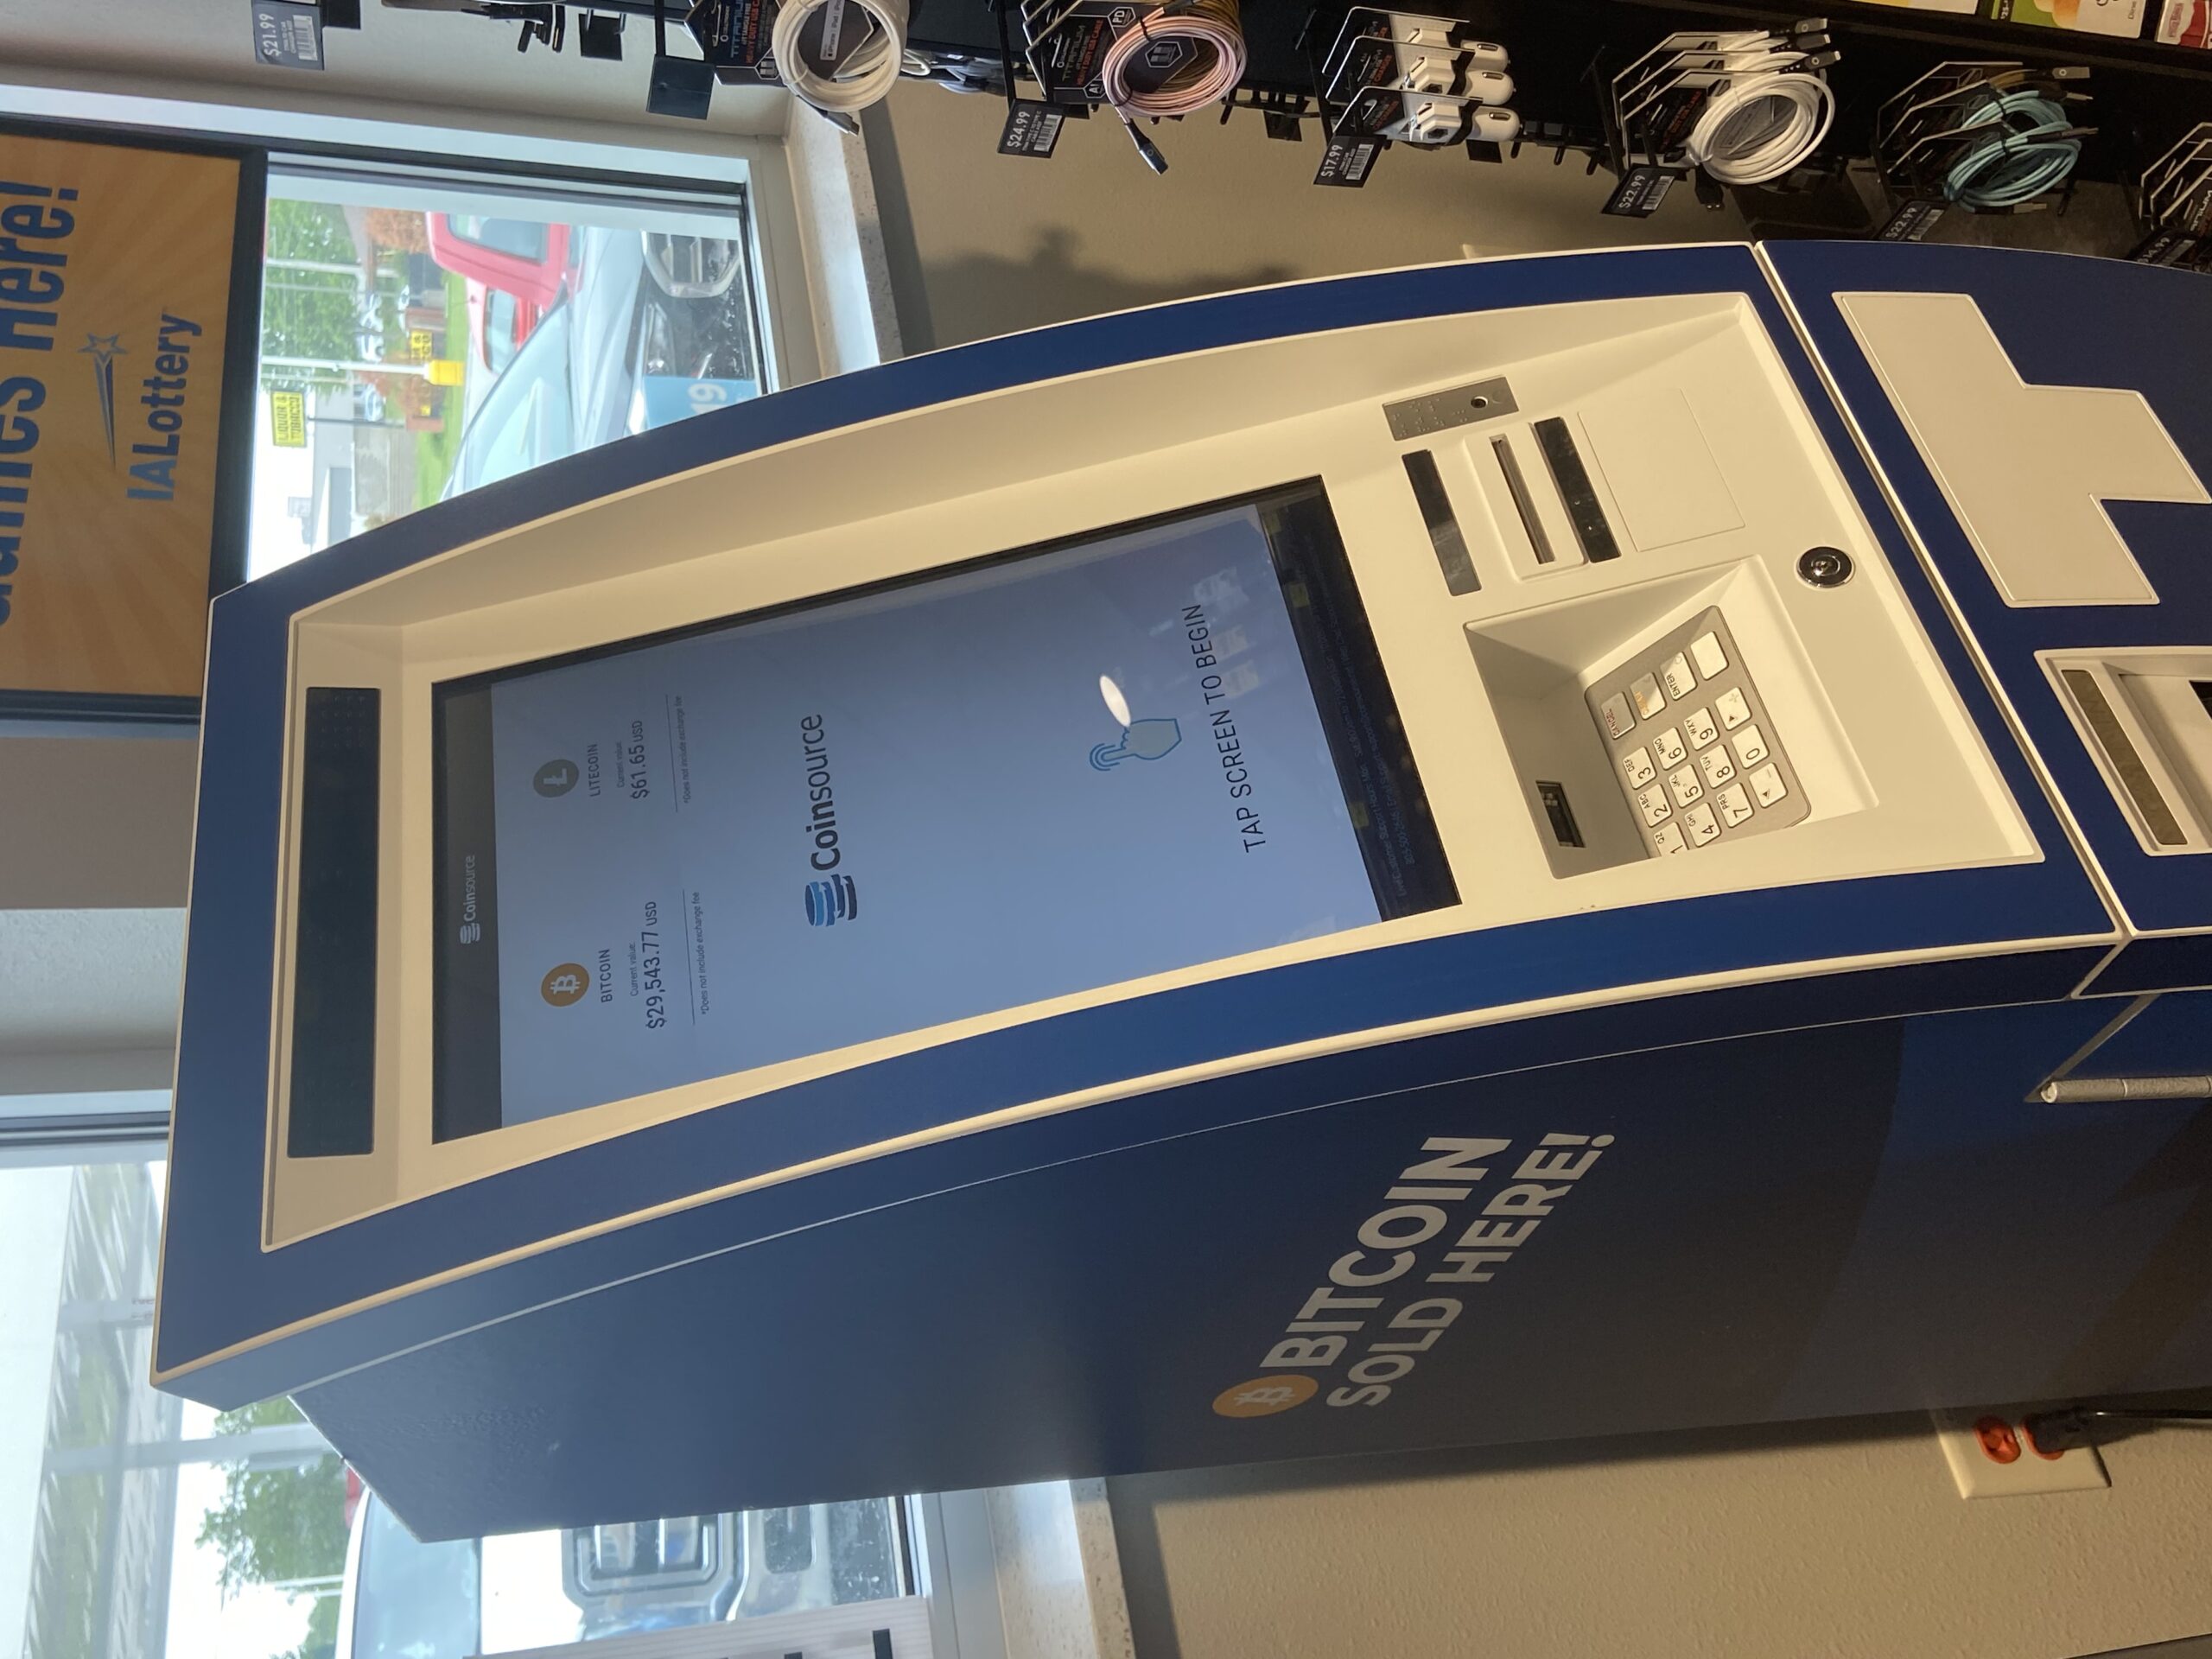 A Bitcoin ATM machine at Kwik Star in Iowa City.